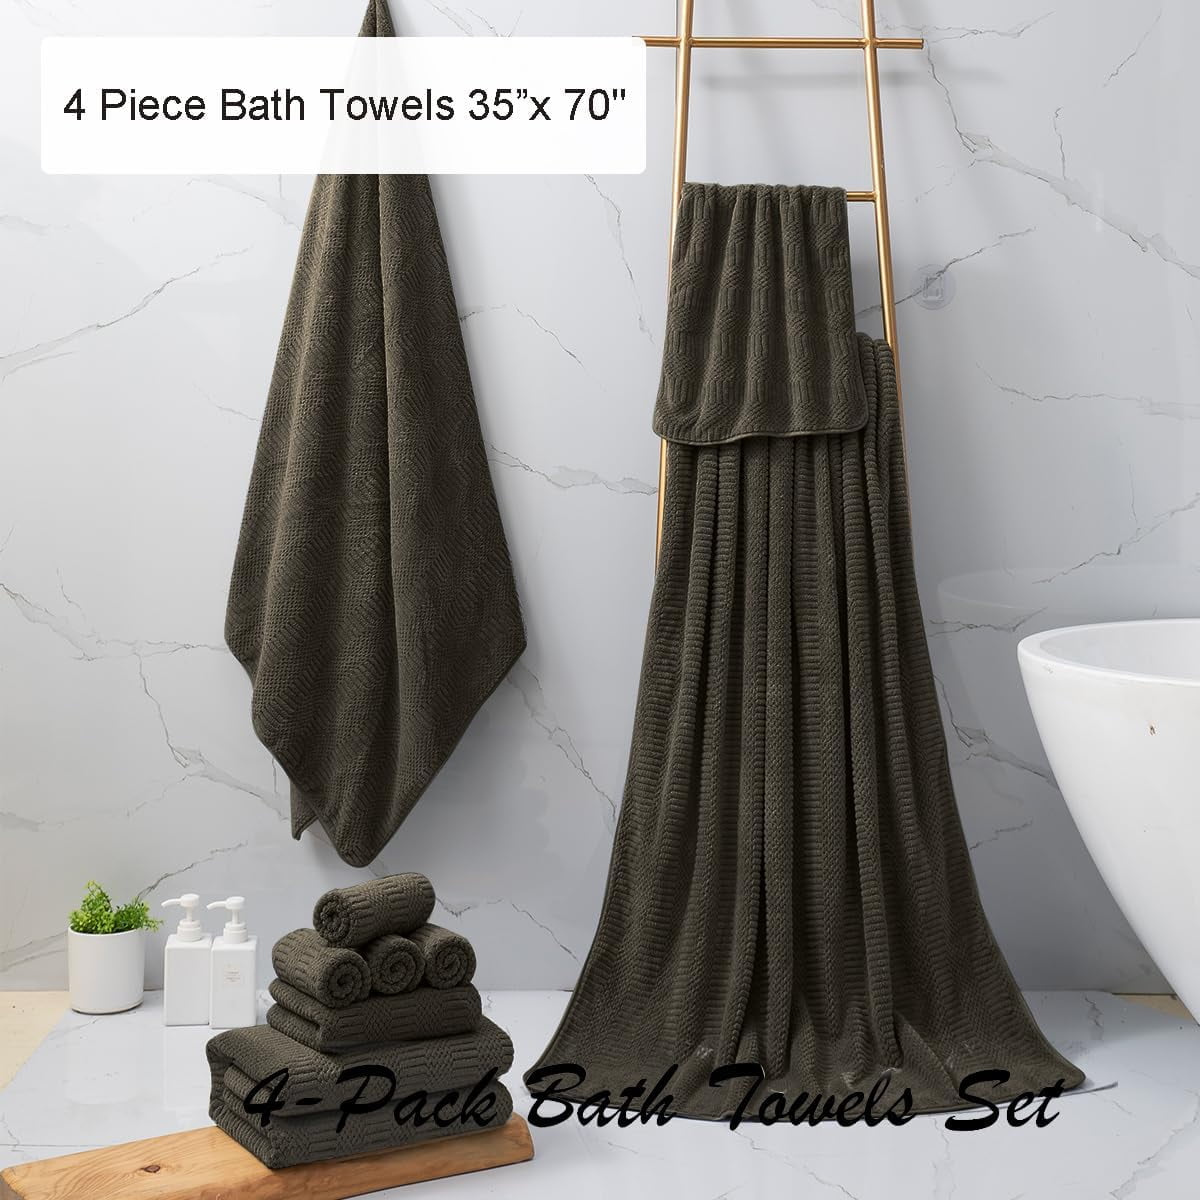 Jessy Home Ultra Soft 8 Piece Textured Bath Towel Set-2 Oversized Bath  Towel Sheets, 2 Hand Towels, 4 Washcloths - 600 GSM Ultra Soft Dark Purple  Towel 